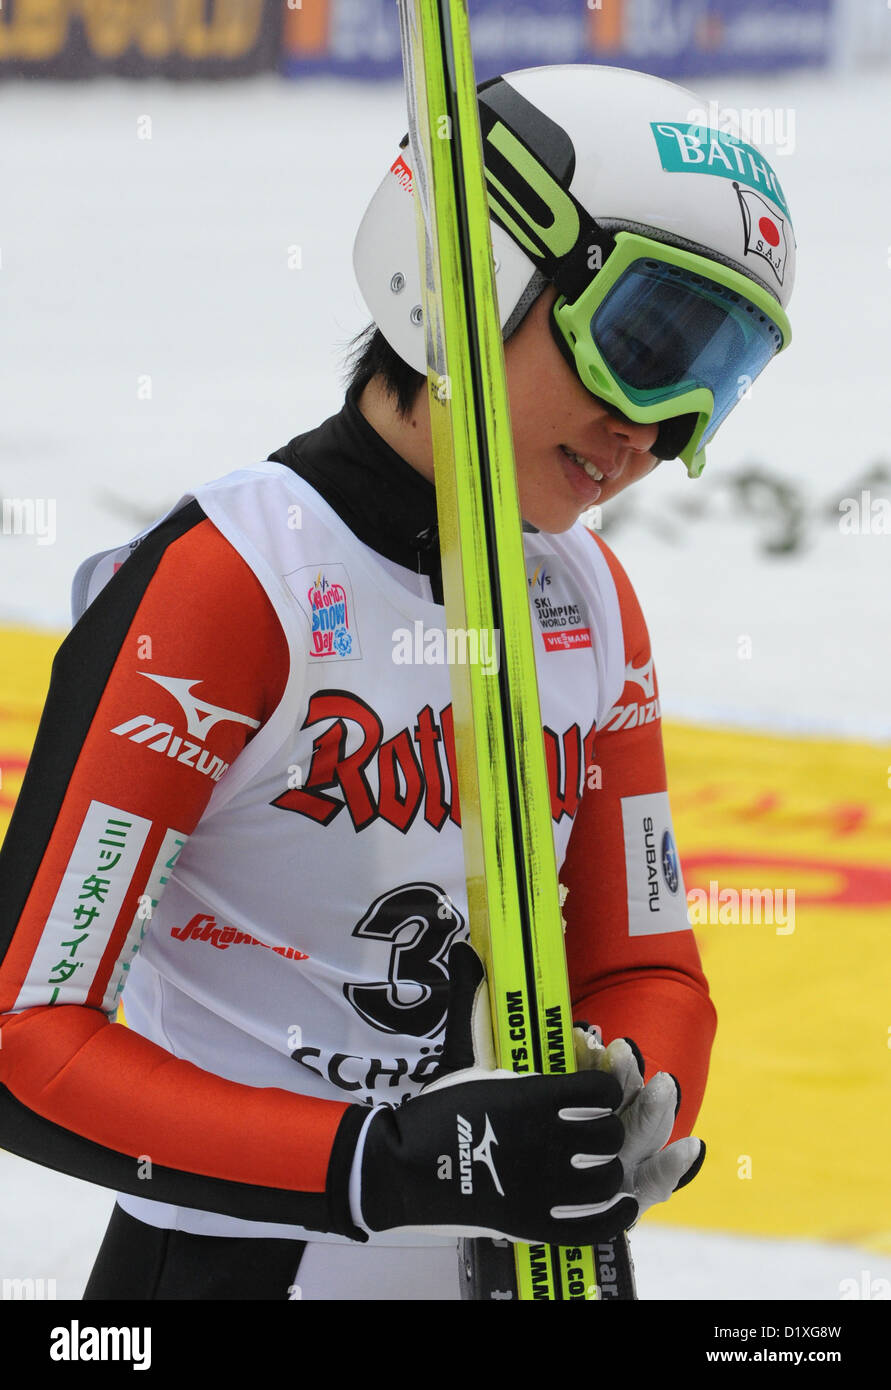 Japanese ski jumper yuki ito hi-res stock photography and images - Alamy